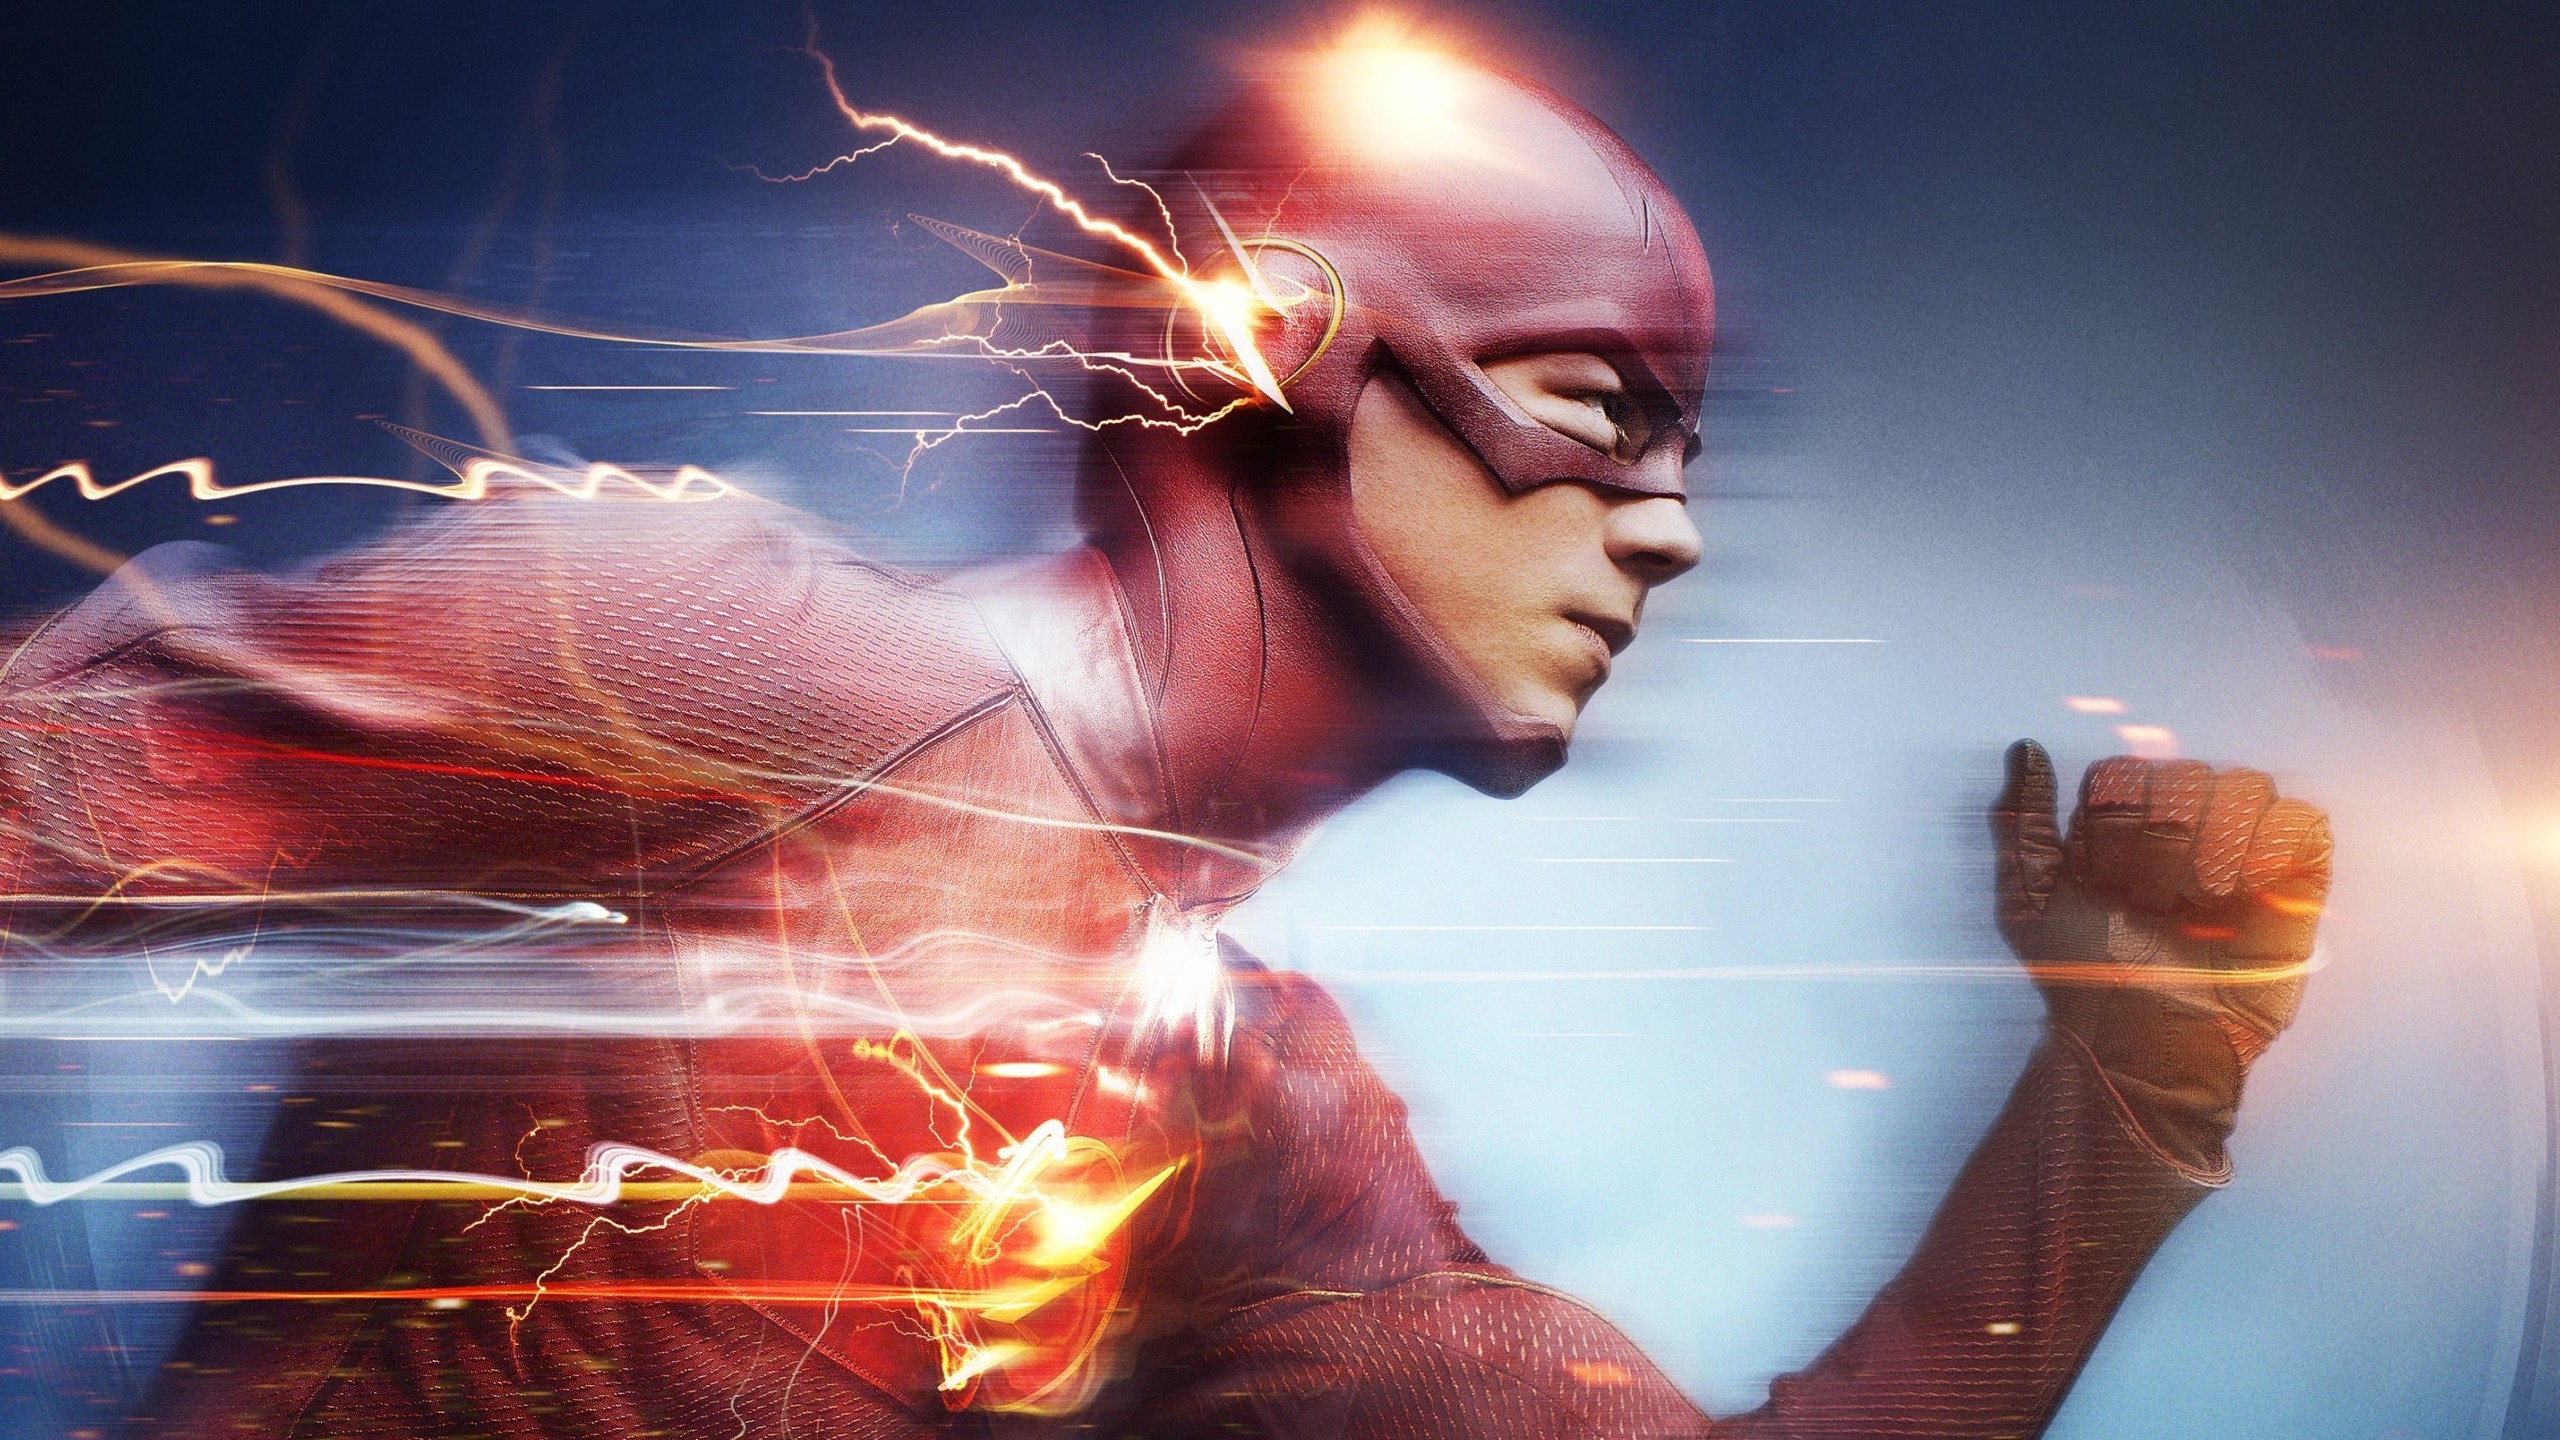 … x 1440 Original. Description: Download Barry Allen The Flash TV Series  wallpaper …